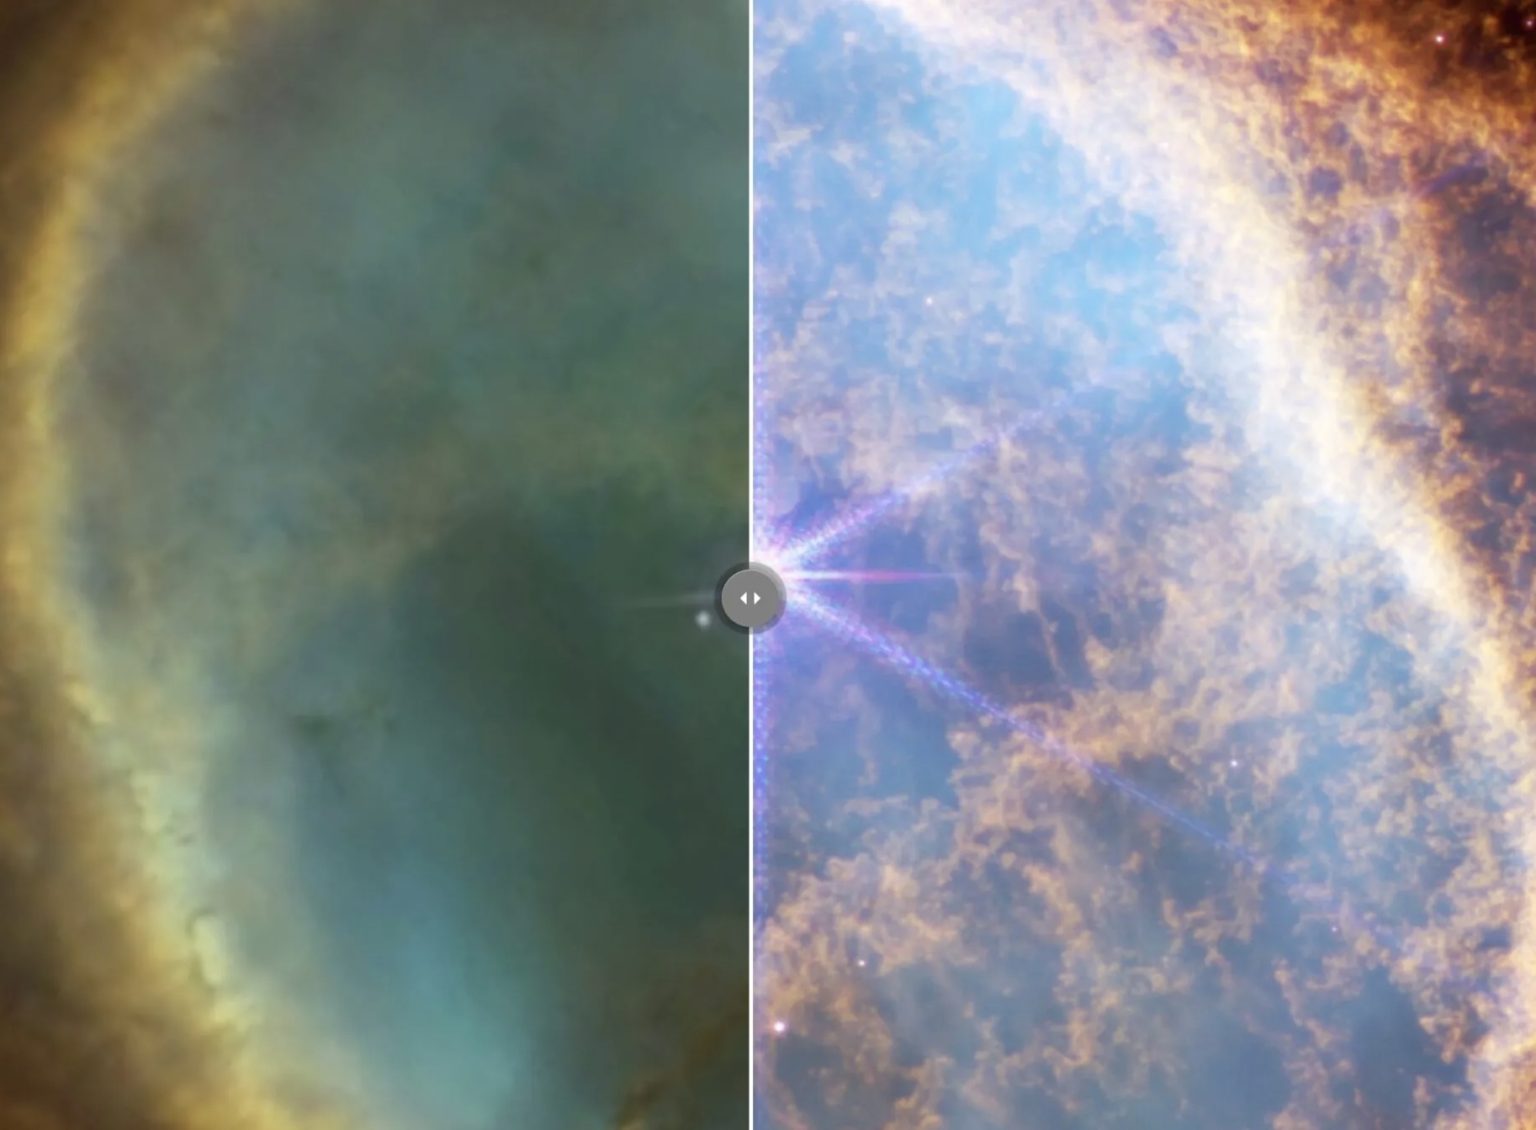 Webb vs. Hubble